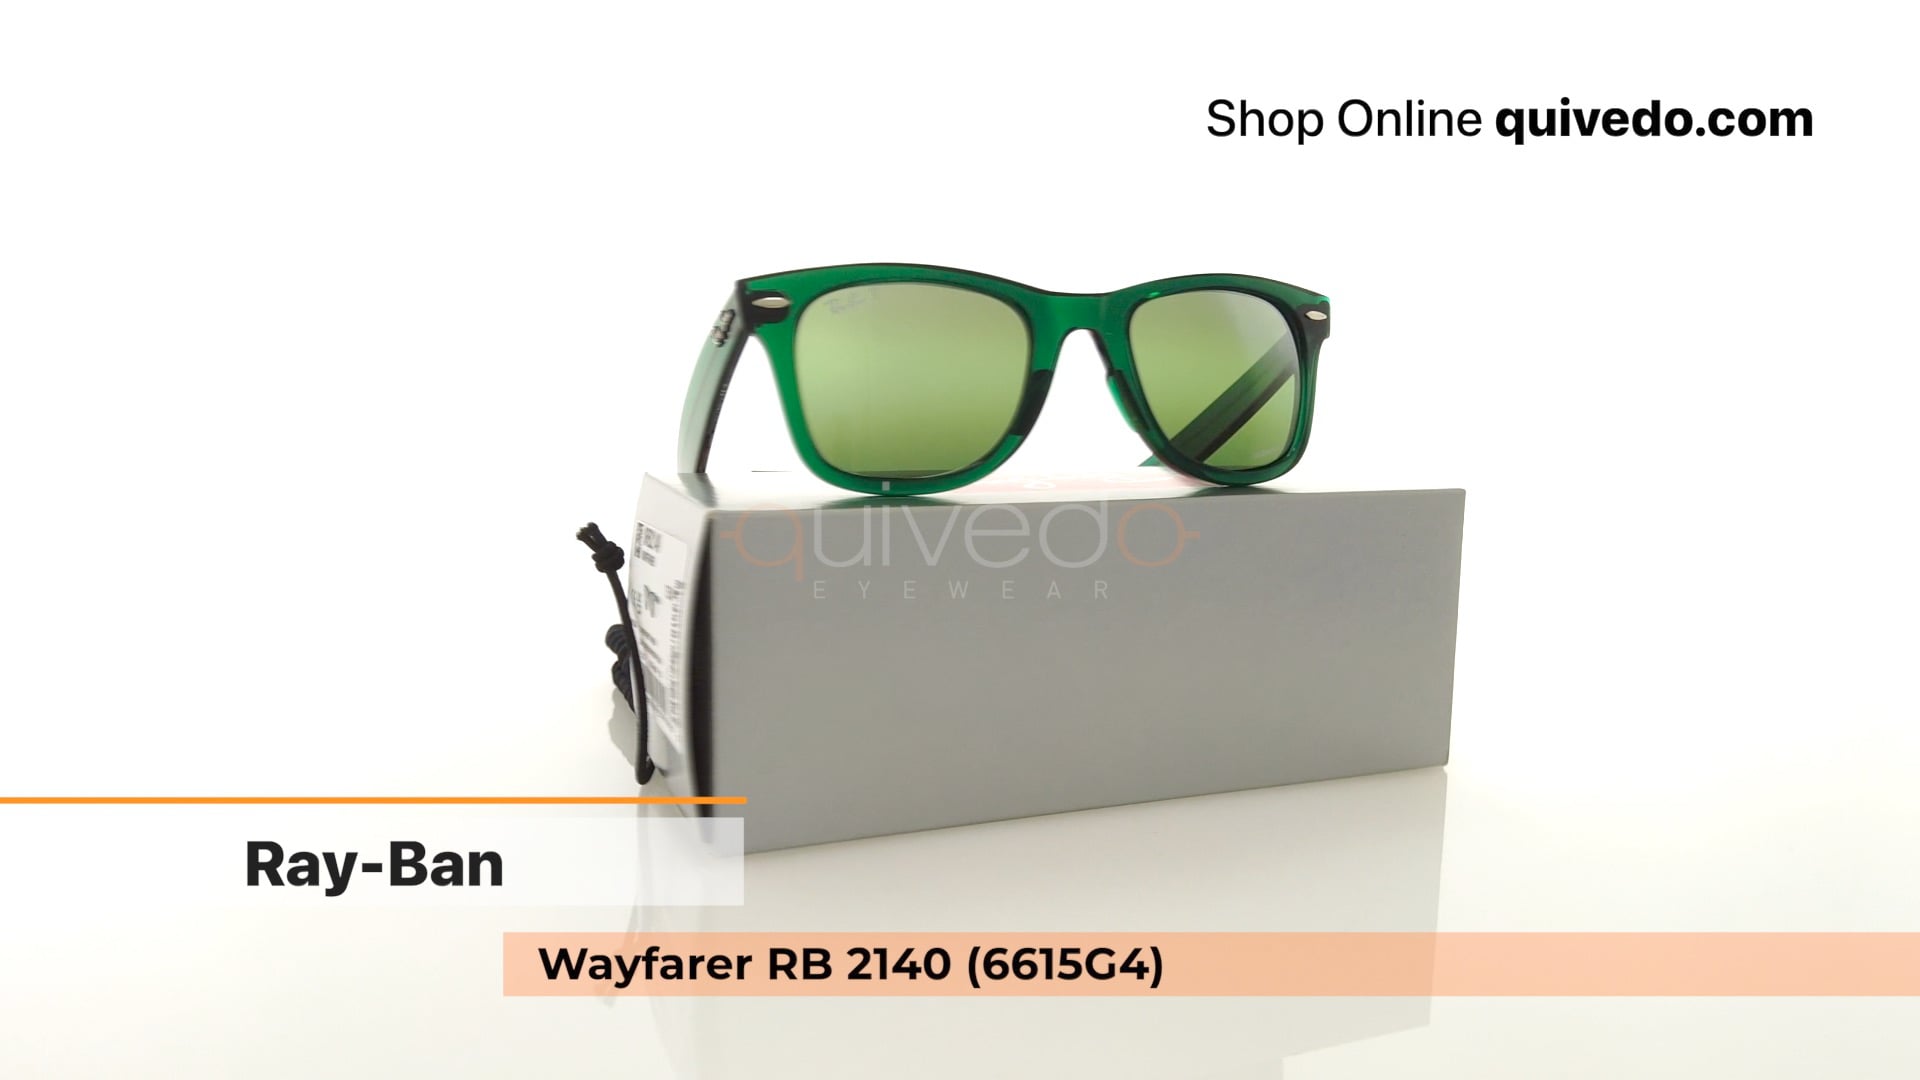 Wayfarer RB 2140 (6615G4)